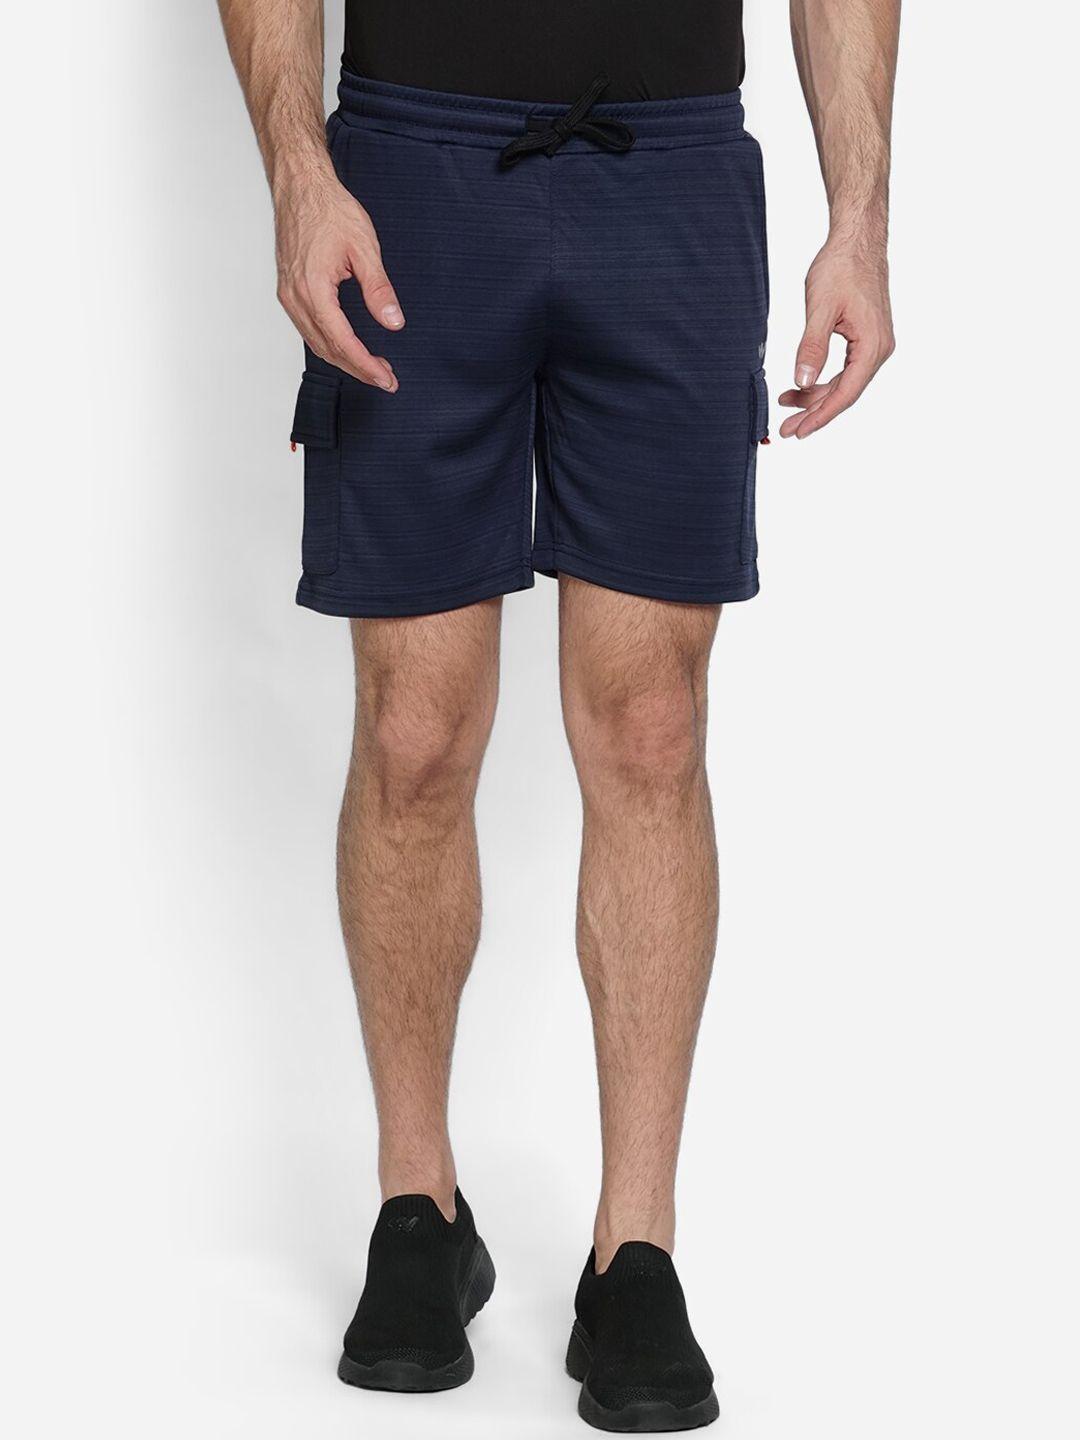 wildcraft men navy blue sports shorts